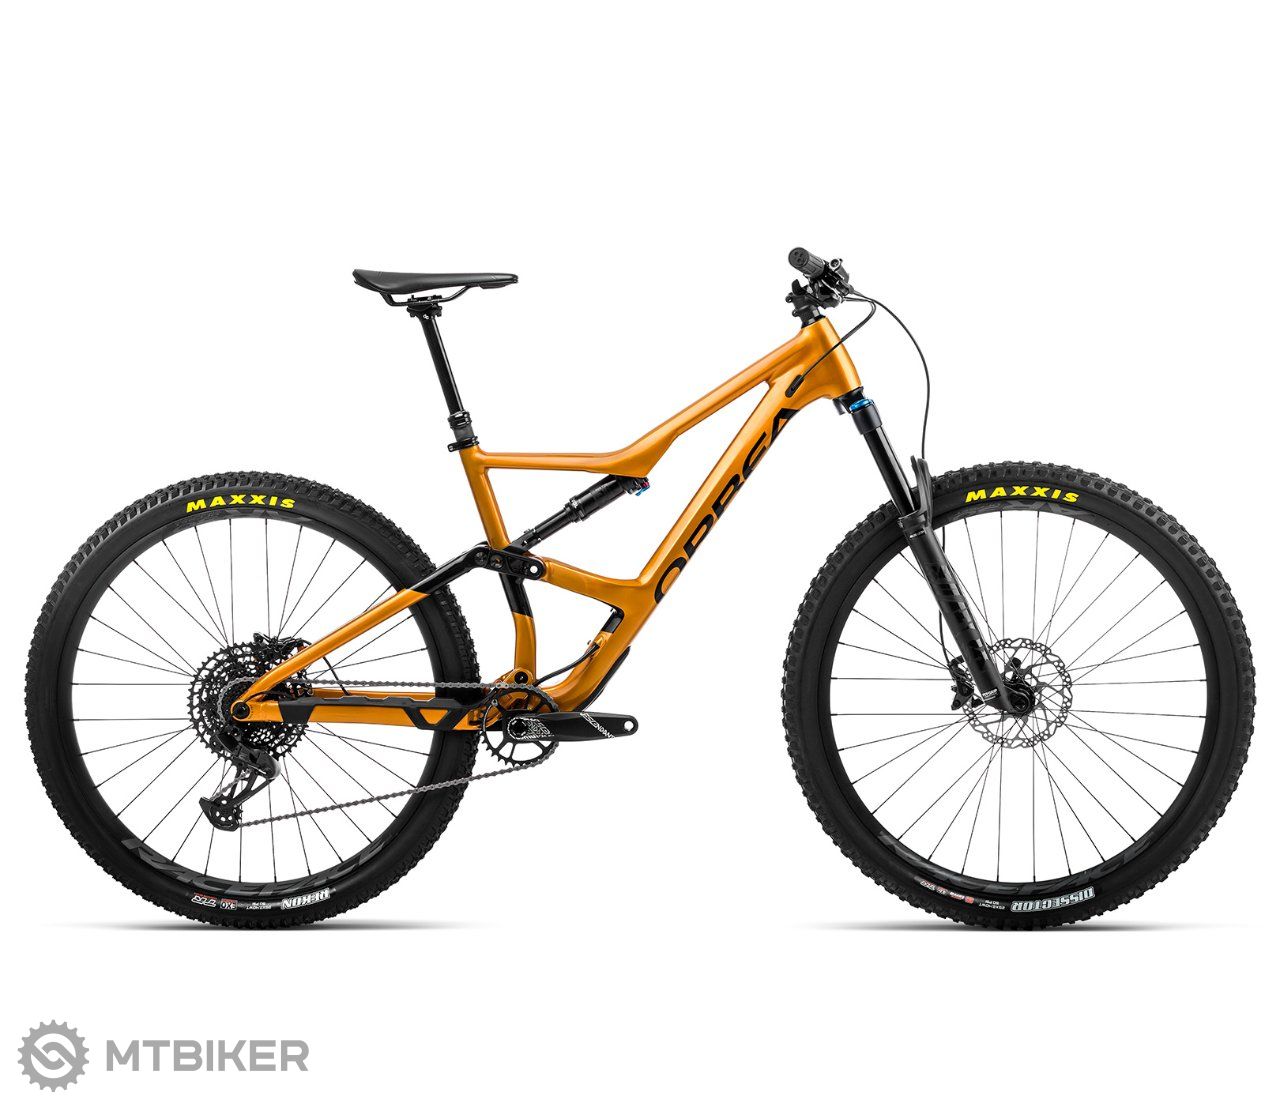 Orbea OCCAM H20-EAGLE 29 bicykel, leo orange/black